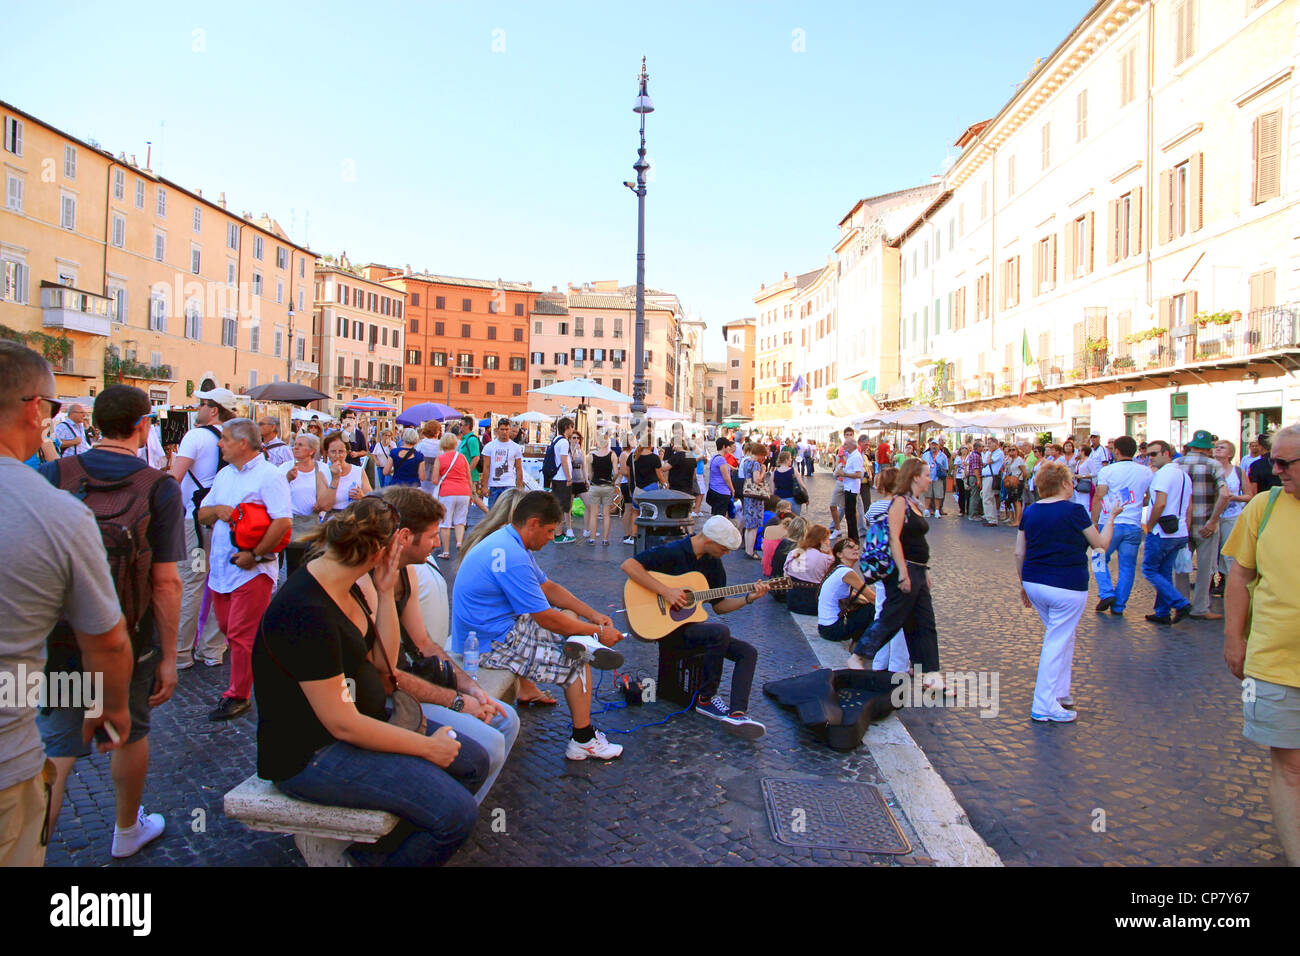 Piazza Navona Square in Rome Stock Photo